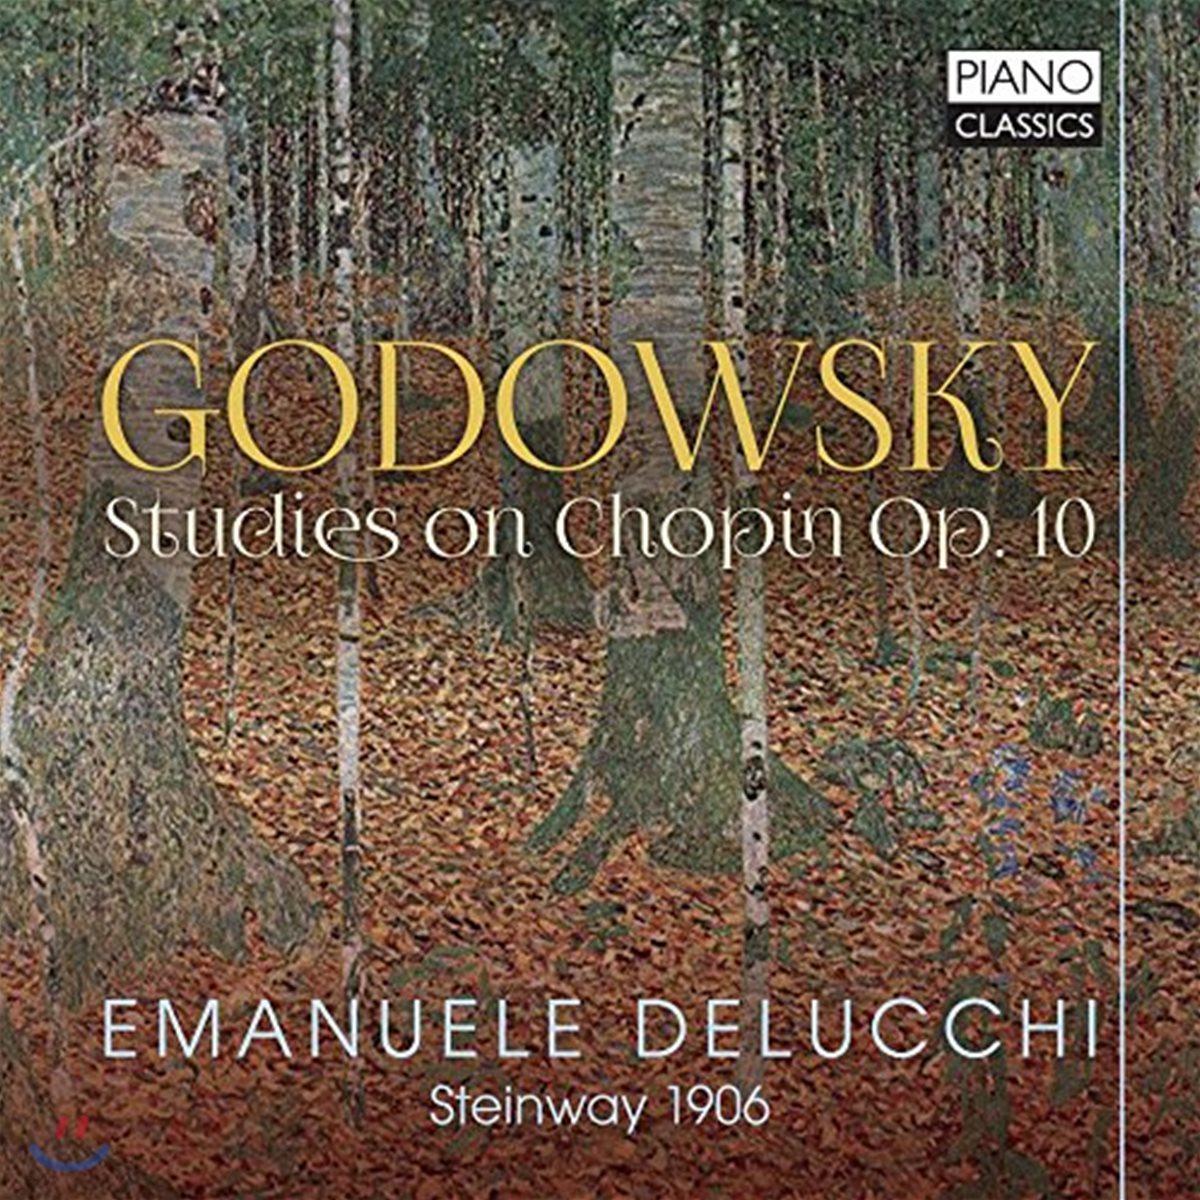 Emanuele Delucchi 고도프스키: 왼손을 위한 쇼팽 연습곡에 대한 연구집 - 엠마누엘 델루치 (Leopold Godowsky: Studies on Chopin&#39;s Etudes Op.10, for the left hand alone)